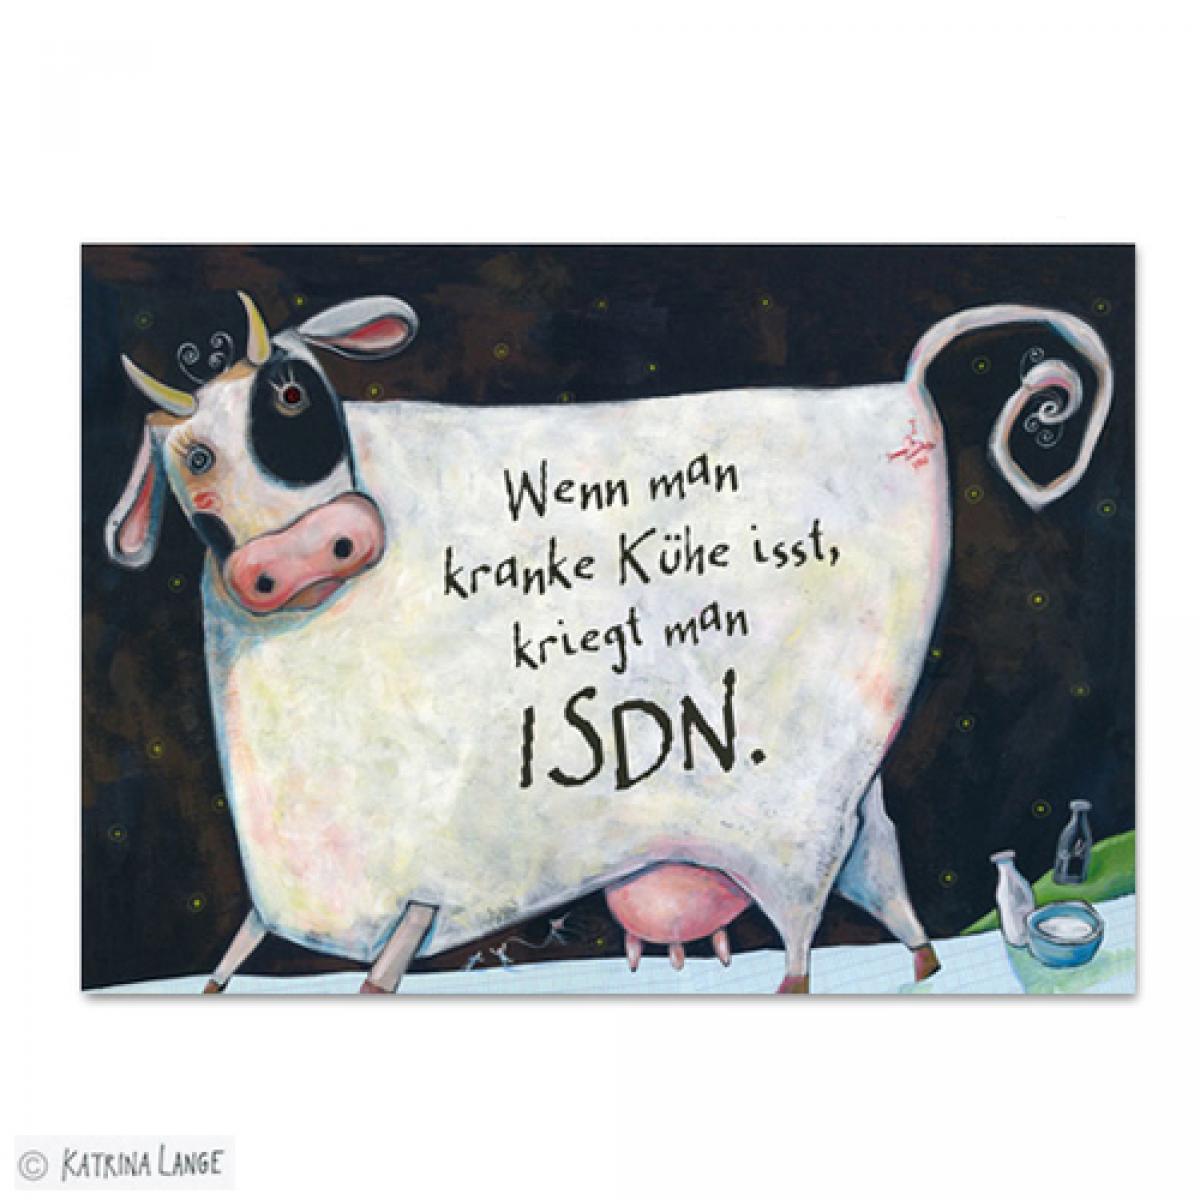 Postkarte: Wenn man kranke Kühe isst, kriegt man ISDN.